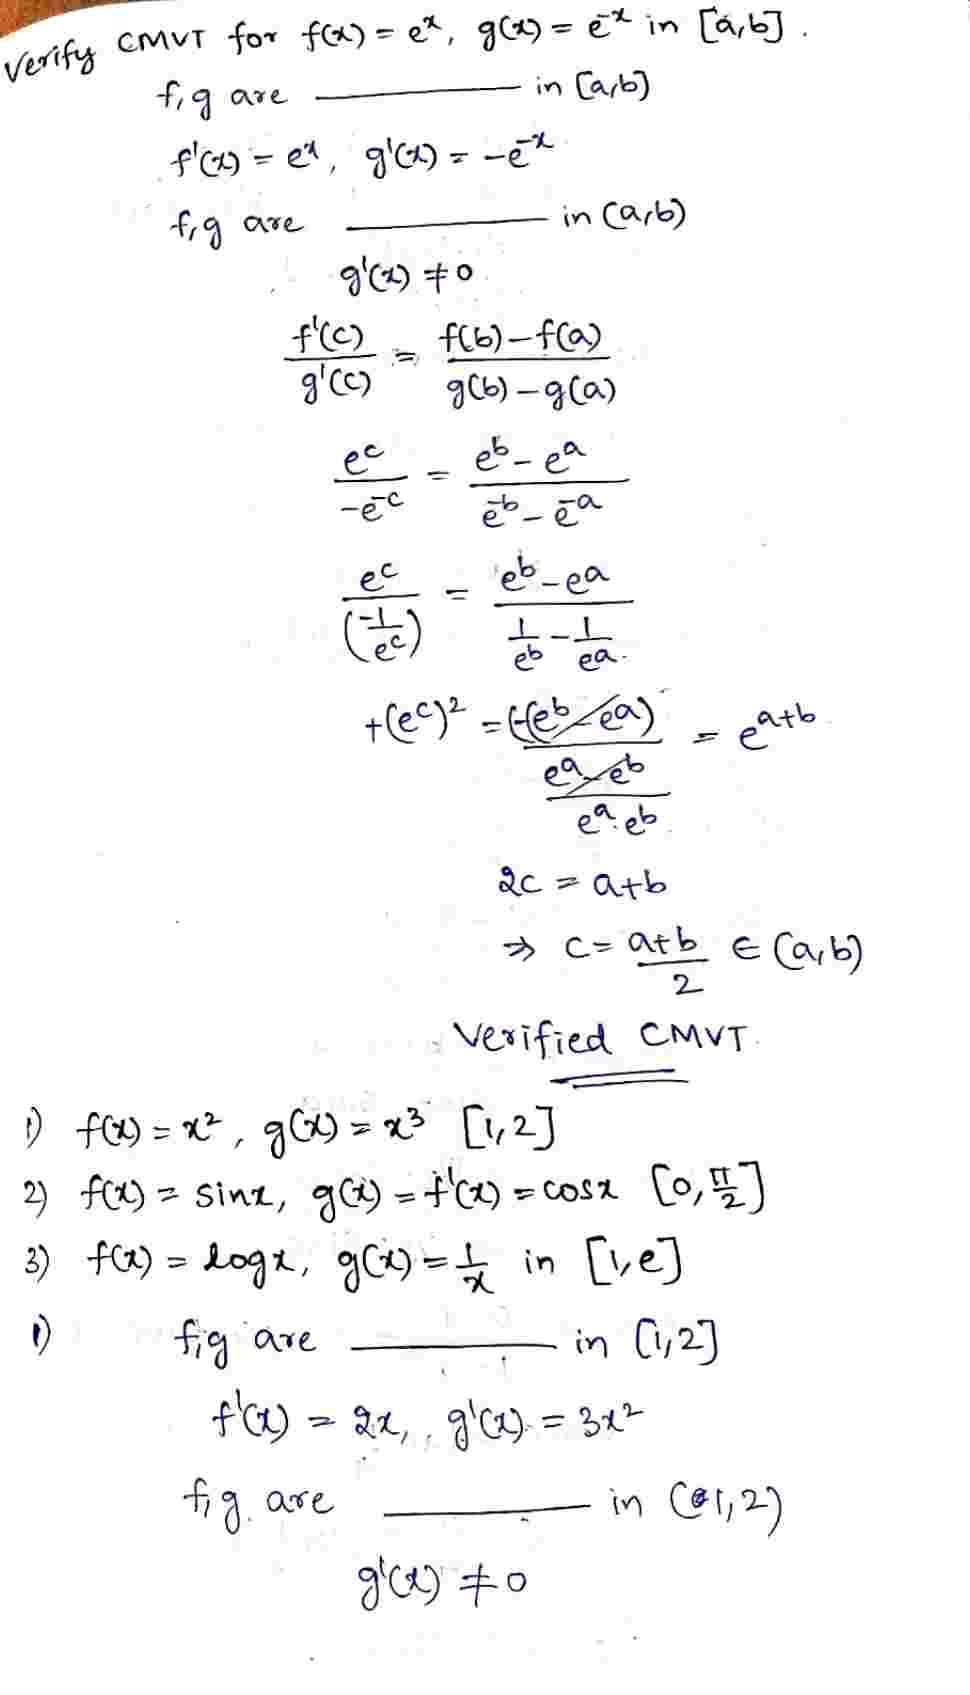 Cauchy's mean value theorem